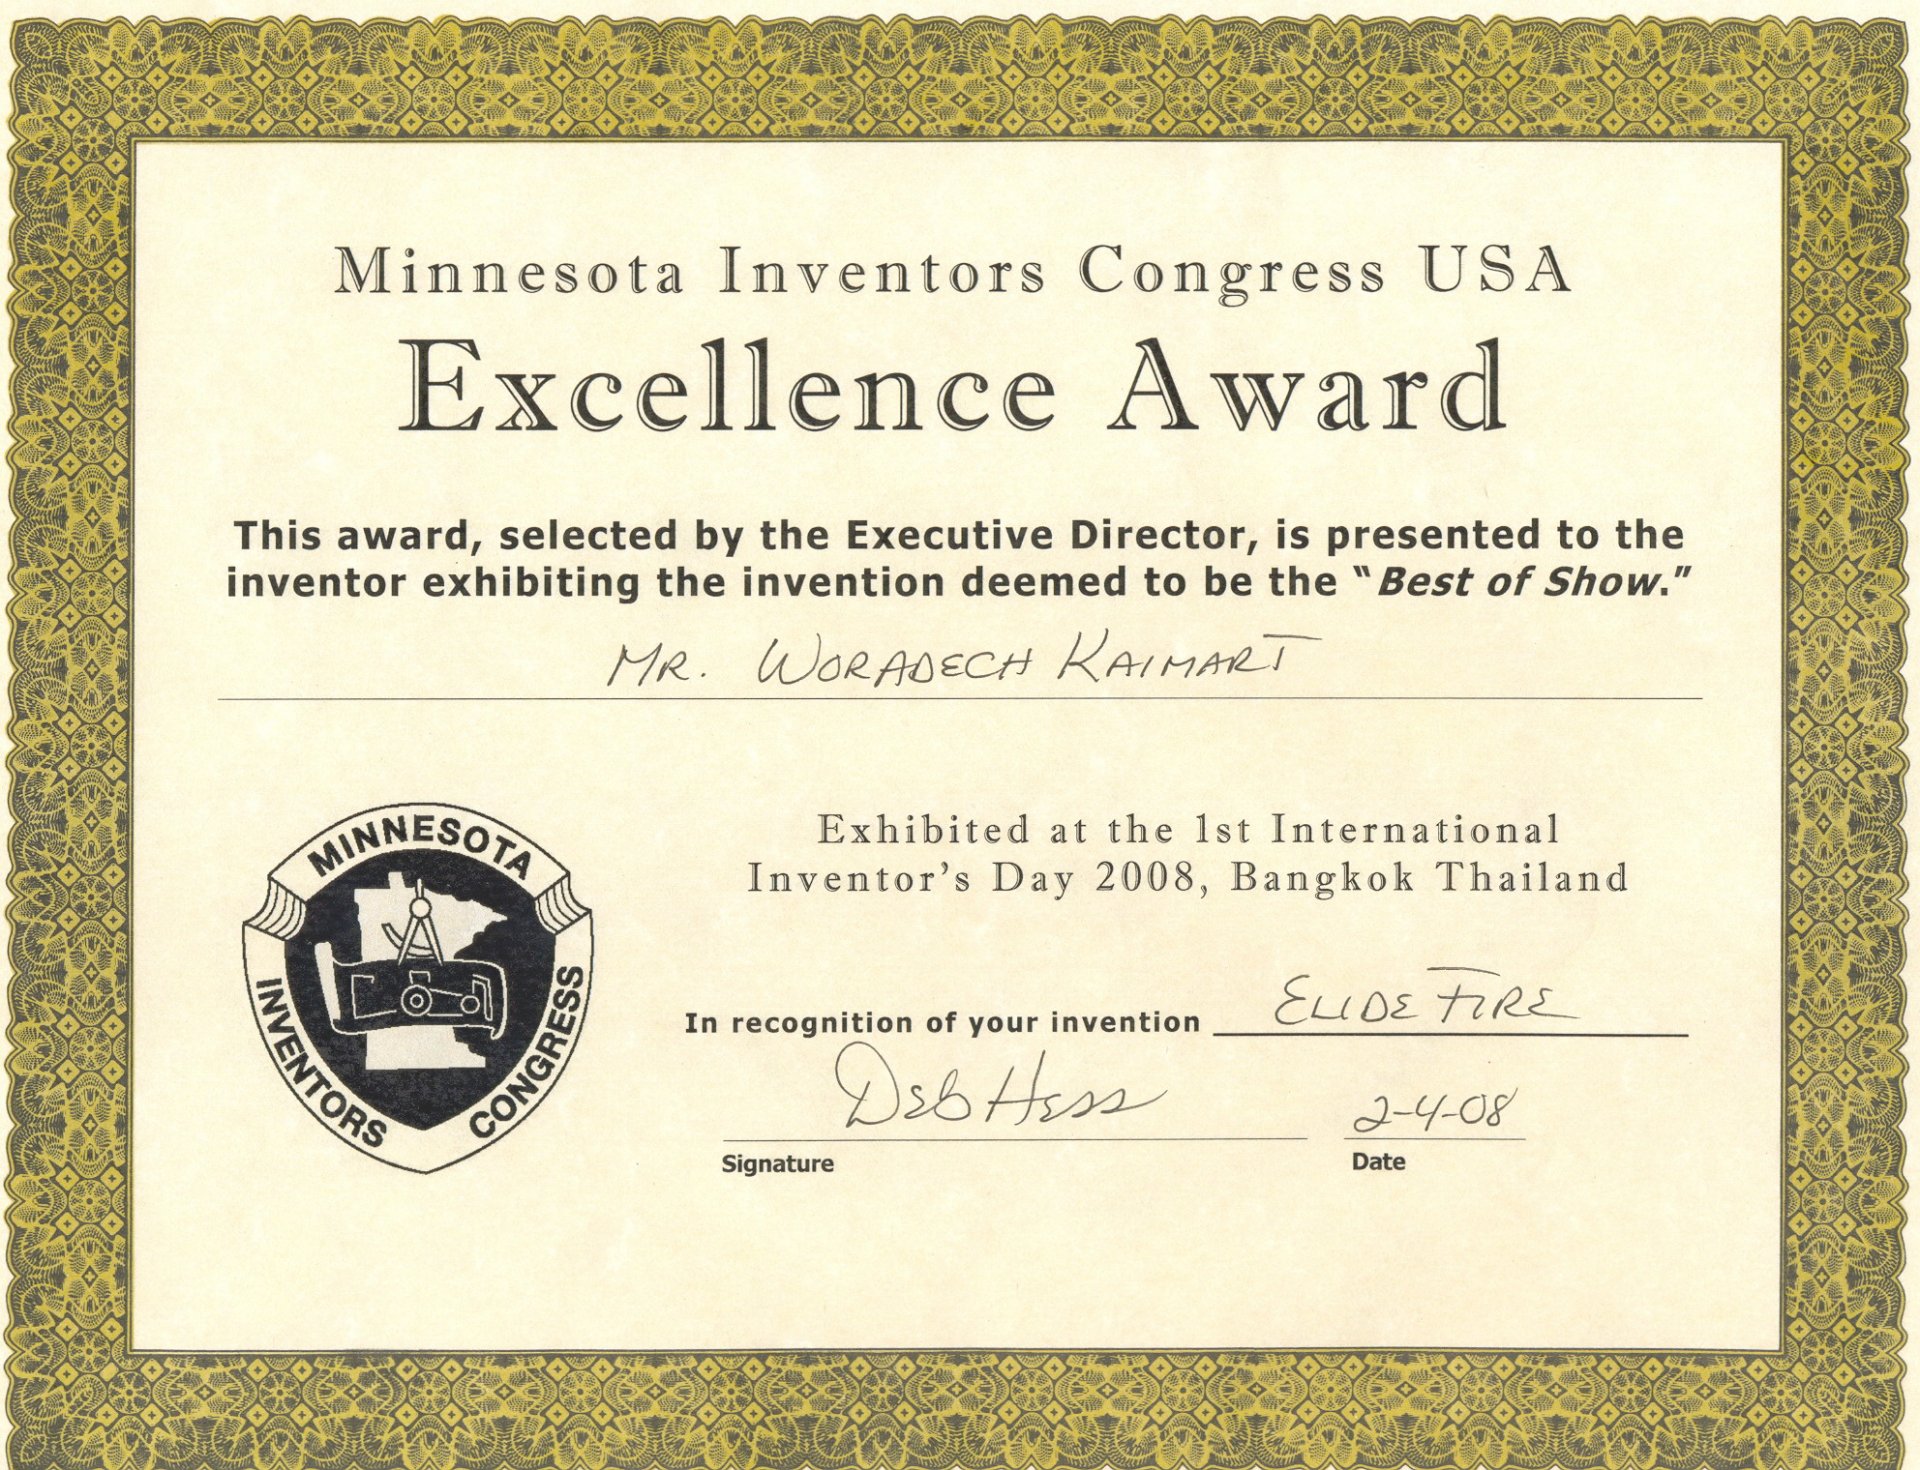 EXCELLENCE AWARD, MINNESOTA INVENTORS CONGRESS USA, (1 st IIDC)